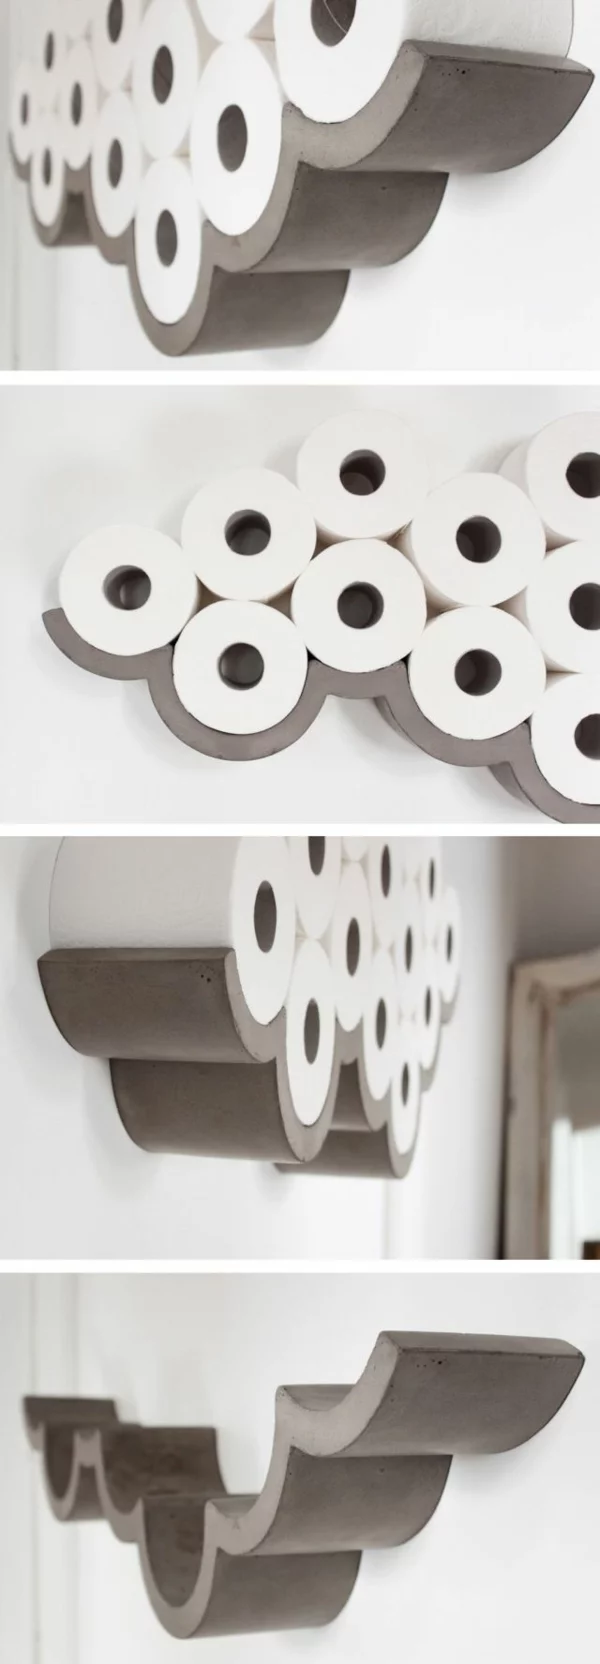 cleveres Produkt design design ideen toilettenpapier halter